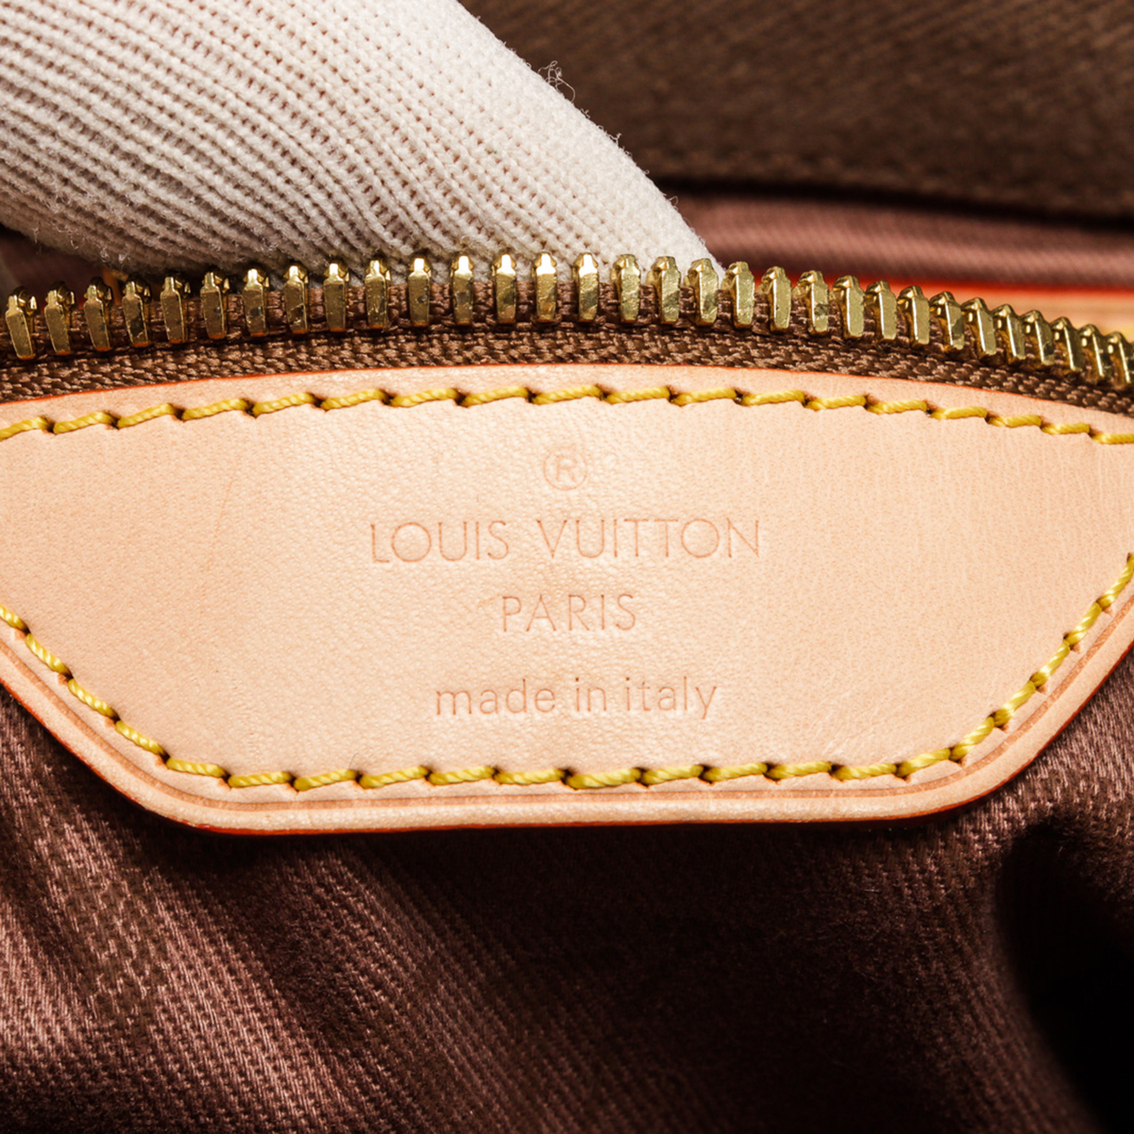 Week in Review: Michael Kors Underwear Campaign, Louis Vuitton Pre